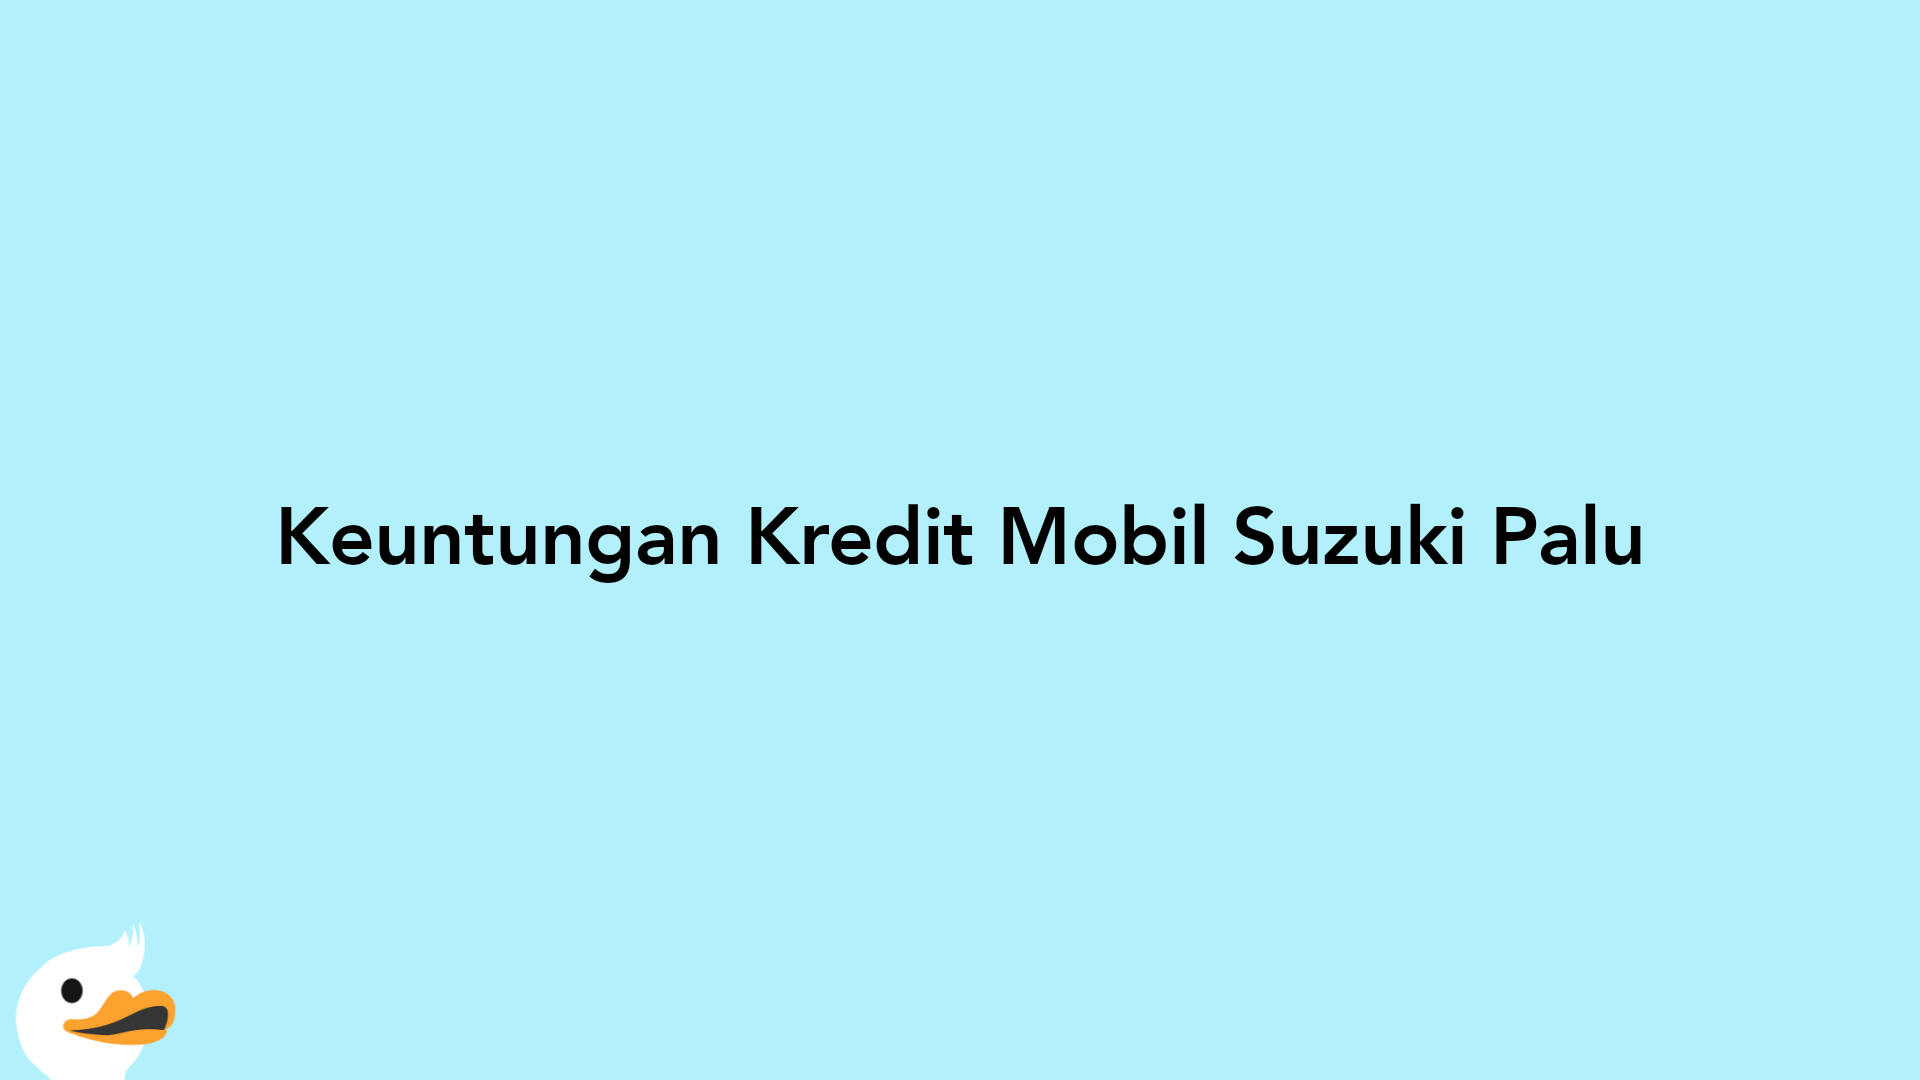 Keuntungan Kredit Mobil Suzuki Palu